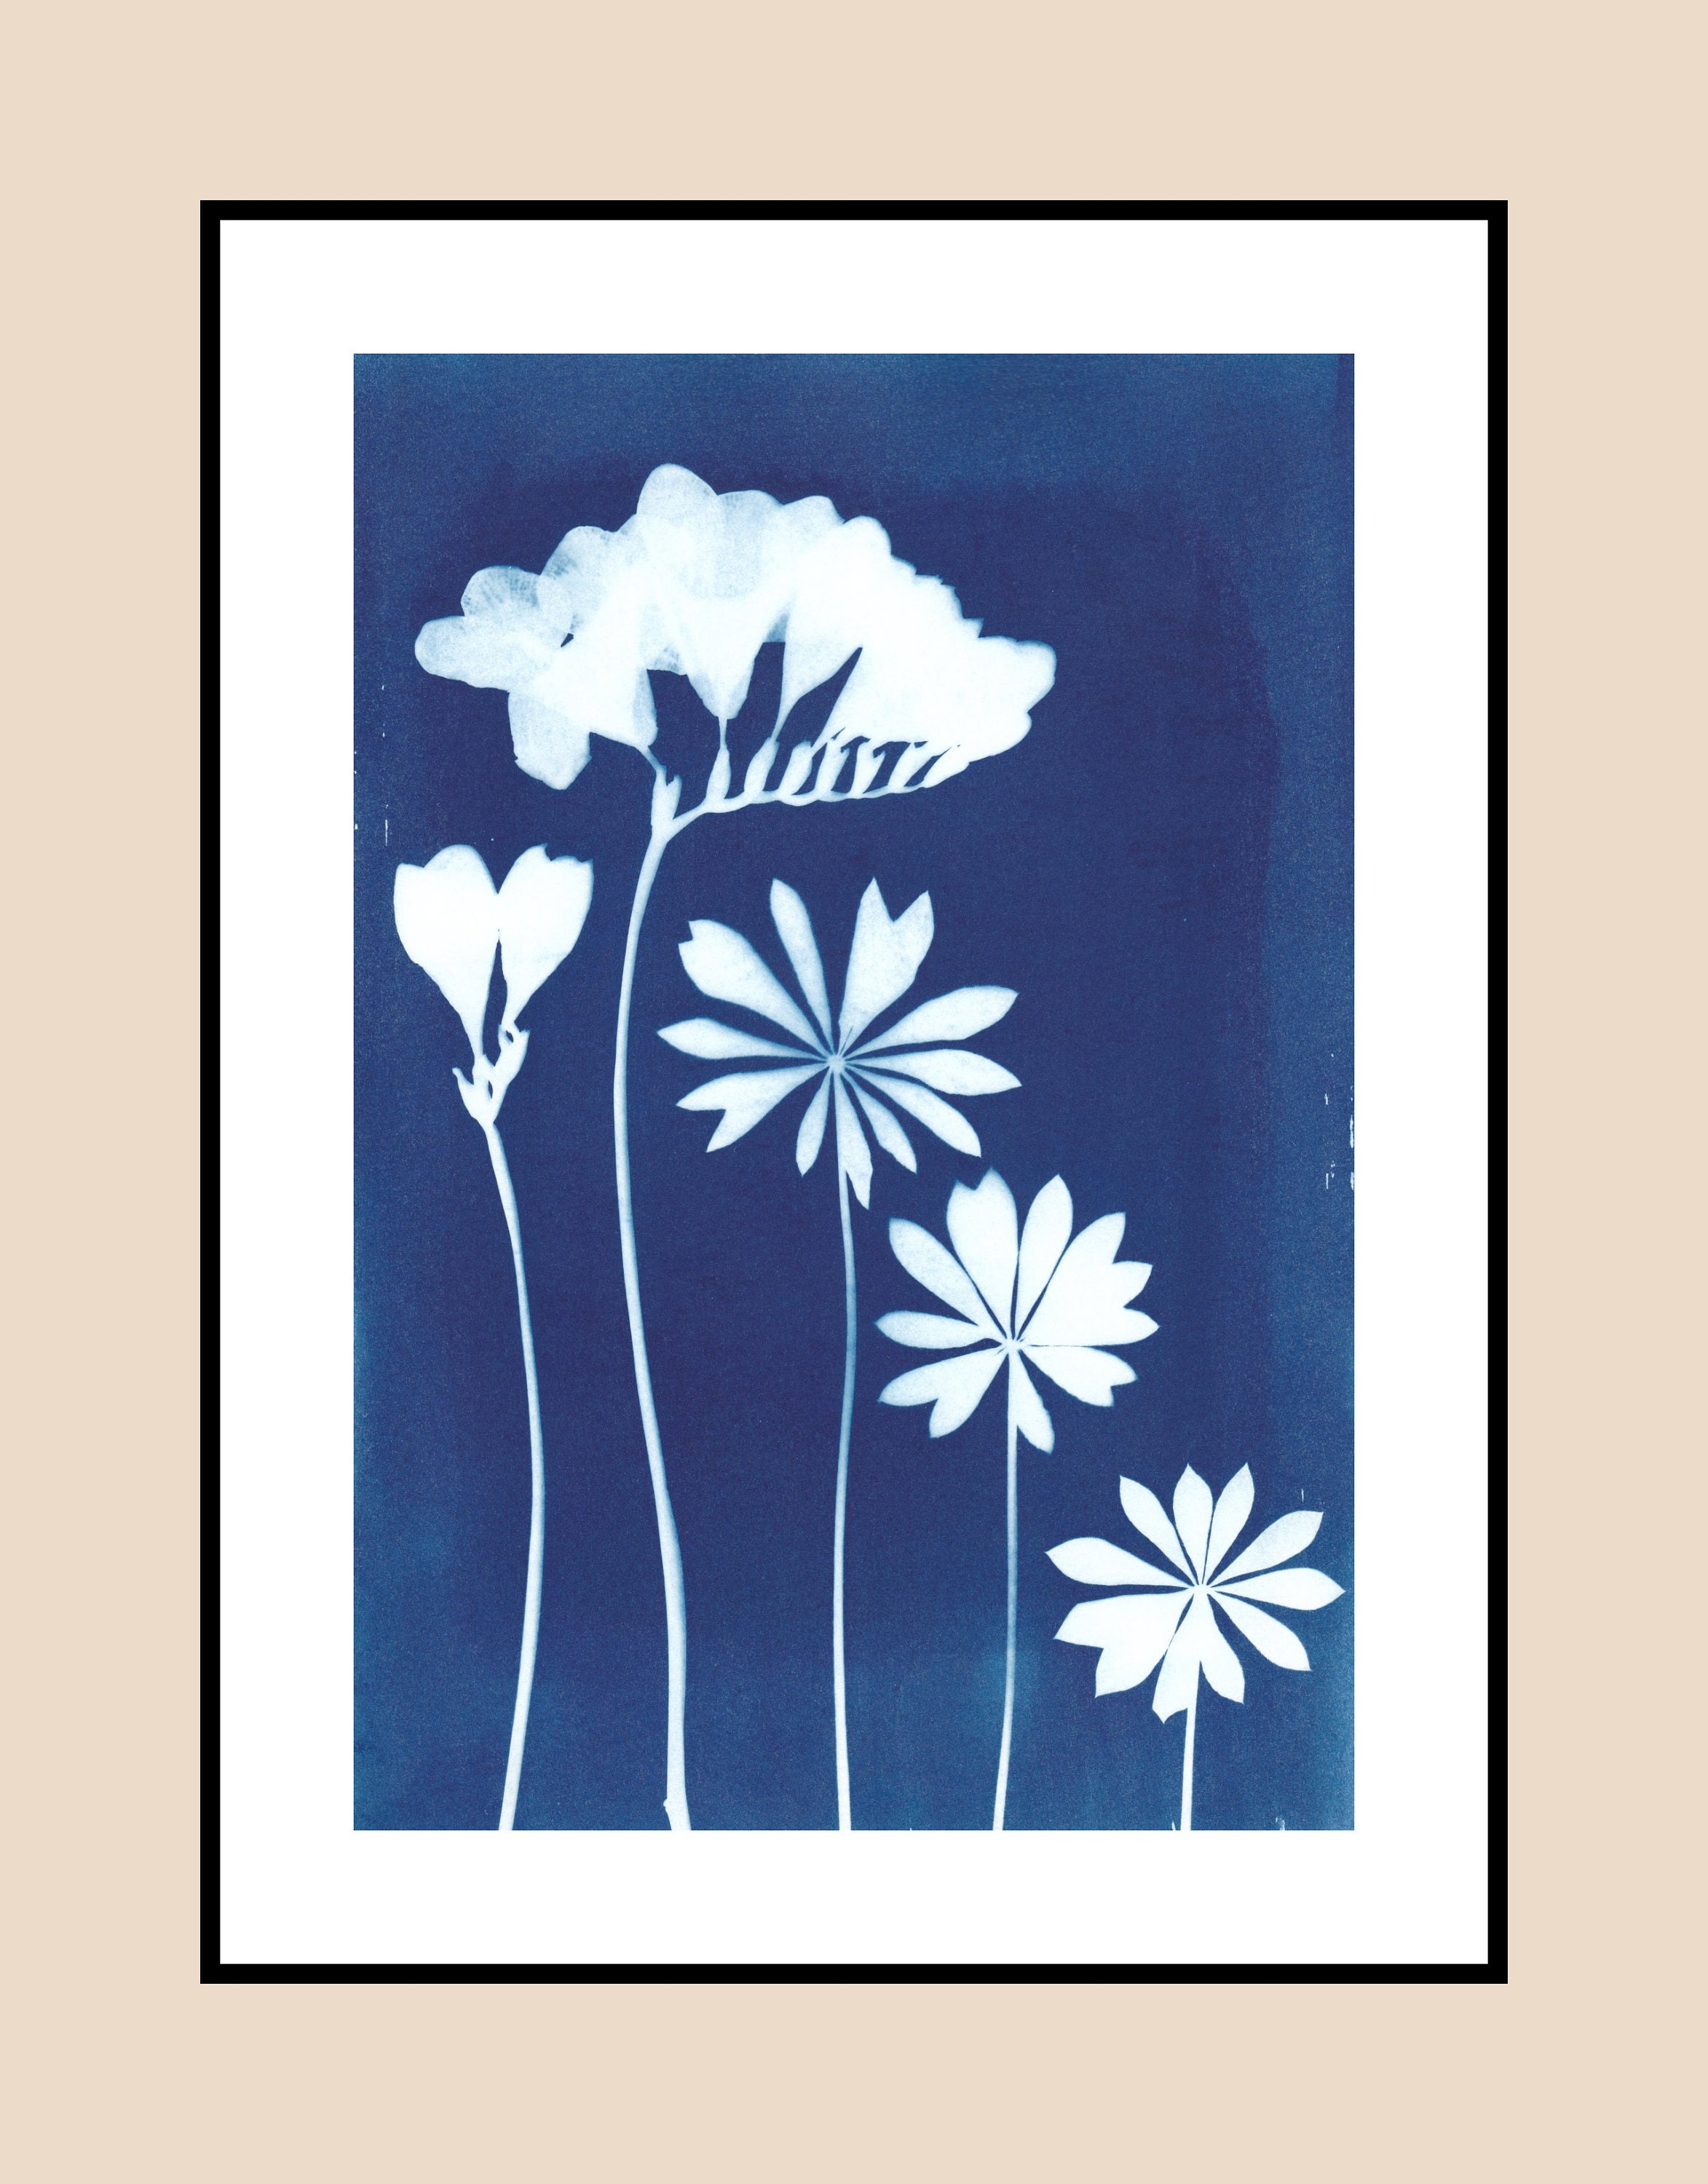 Cyanotype Kit, Solar Printing With Plants, Ferns, Flowers